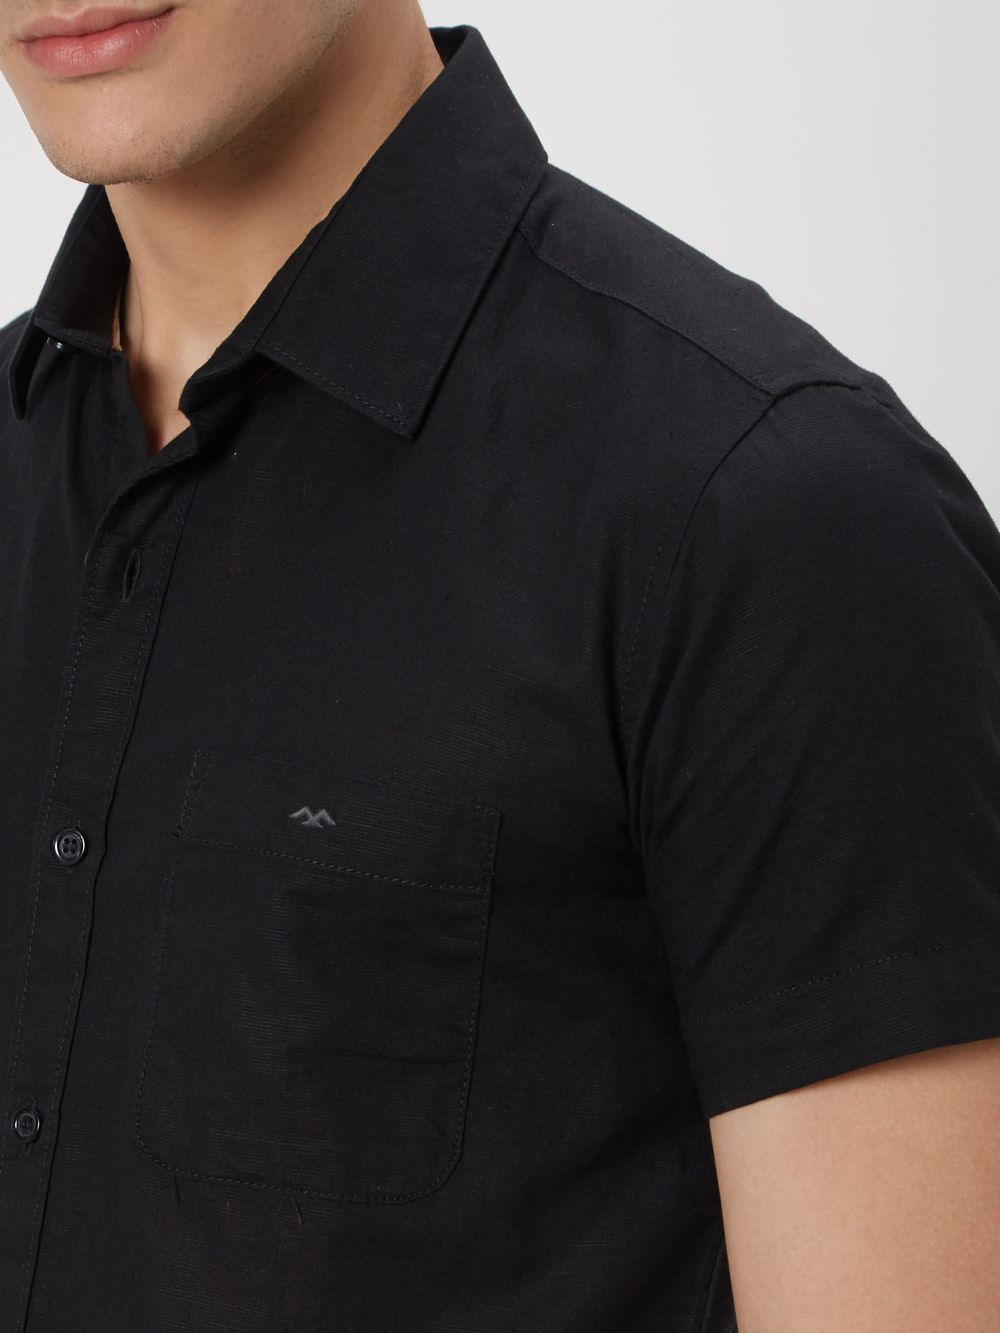 Black Slim Fit Casual Shirt